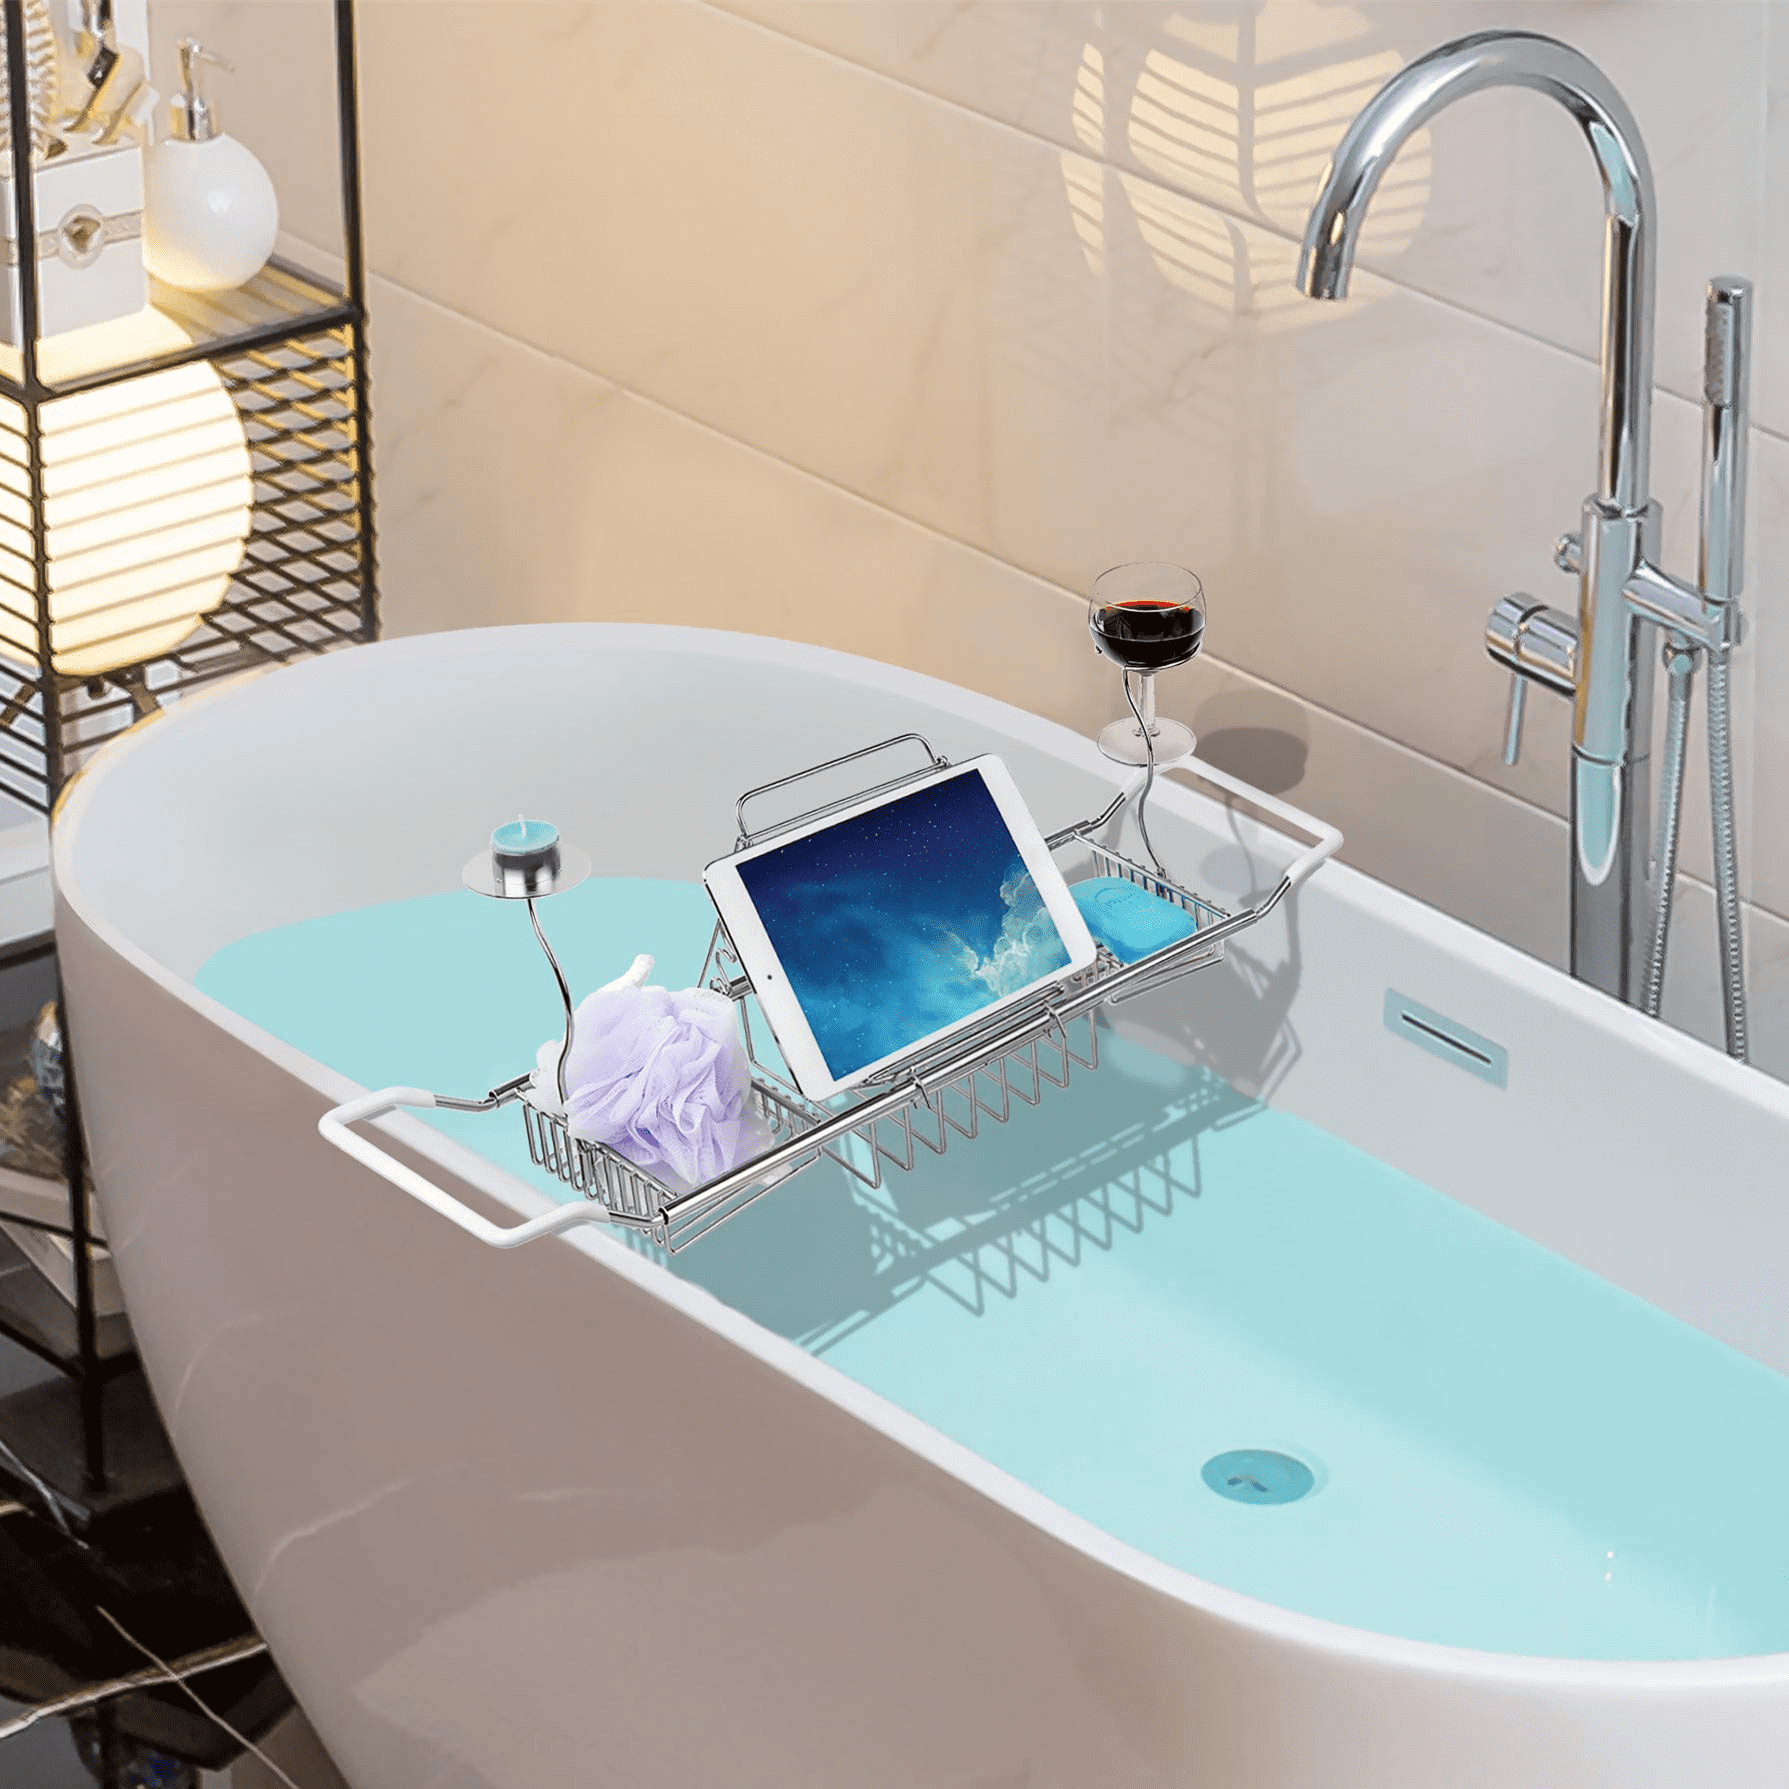 Details about   Tub Bathtub Shelf Caddy Shower Expandable Holder Rack Storage Tray Over Bath For 